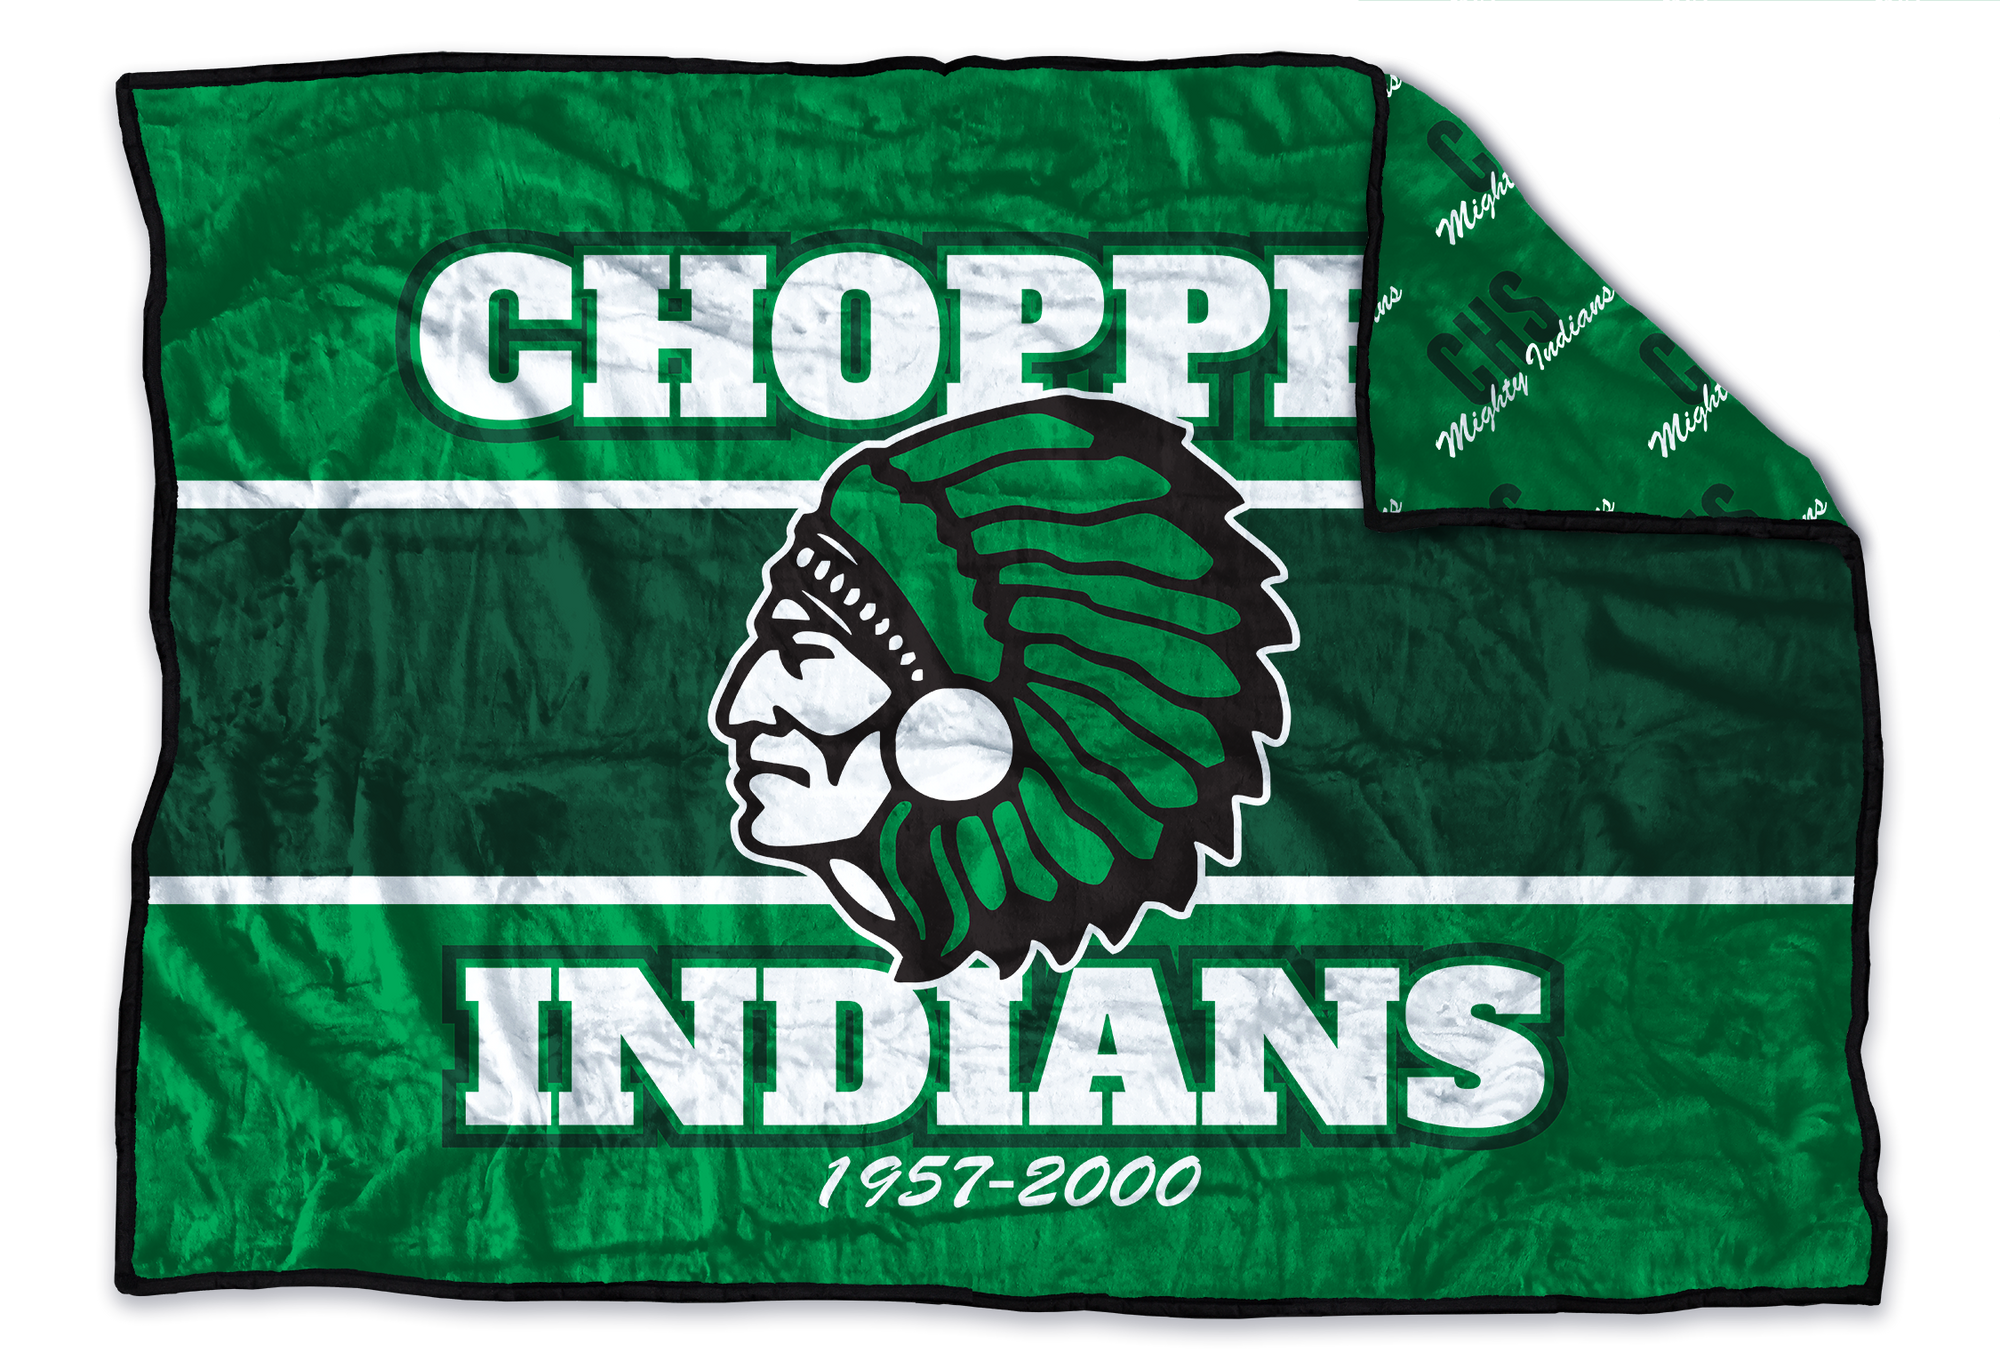 Choppee Indians